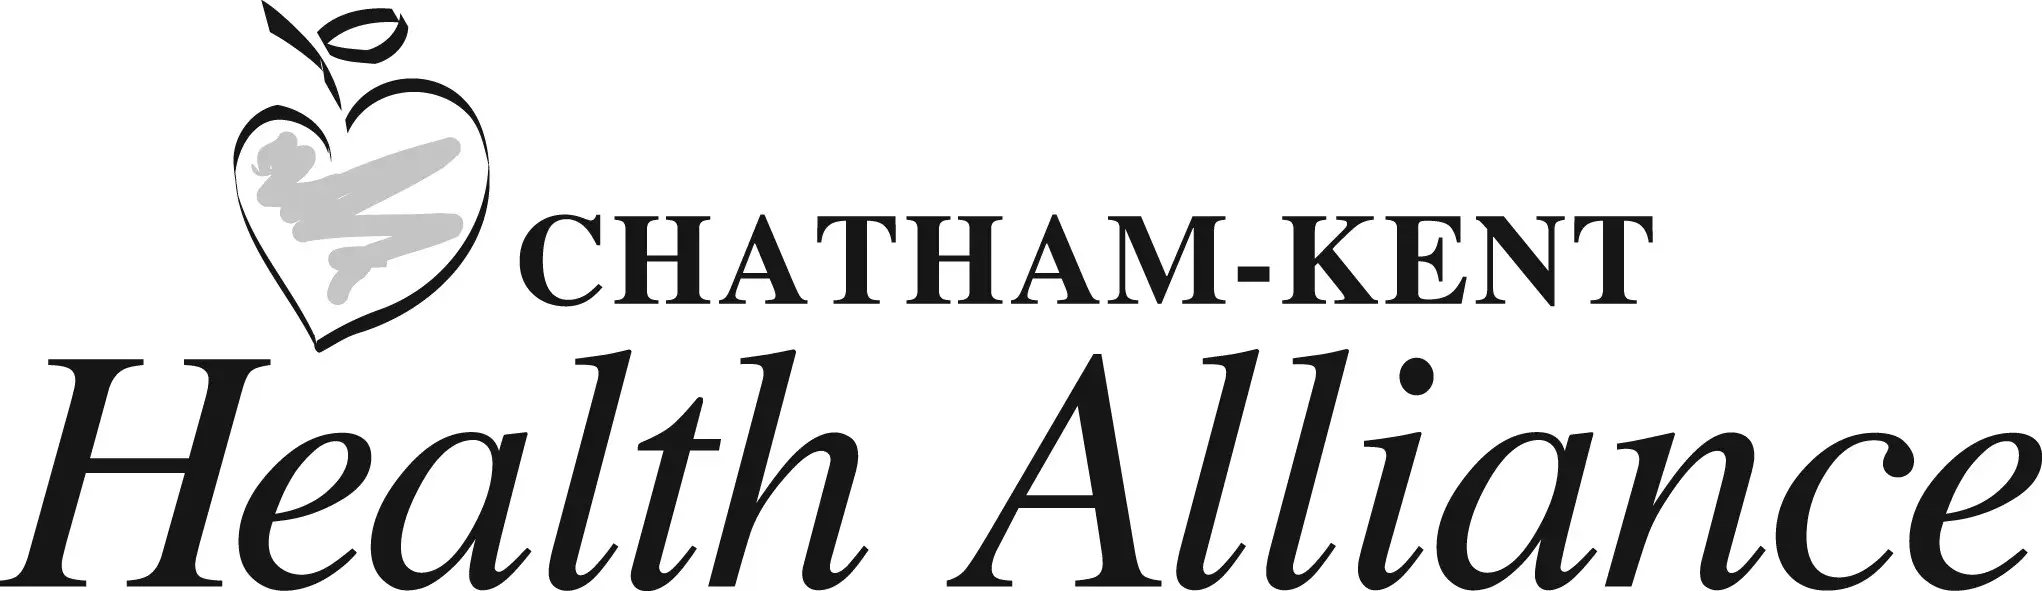 chatham kent logo